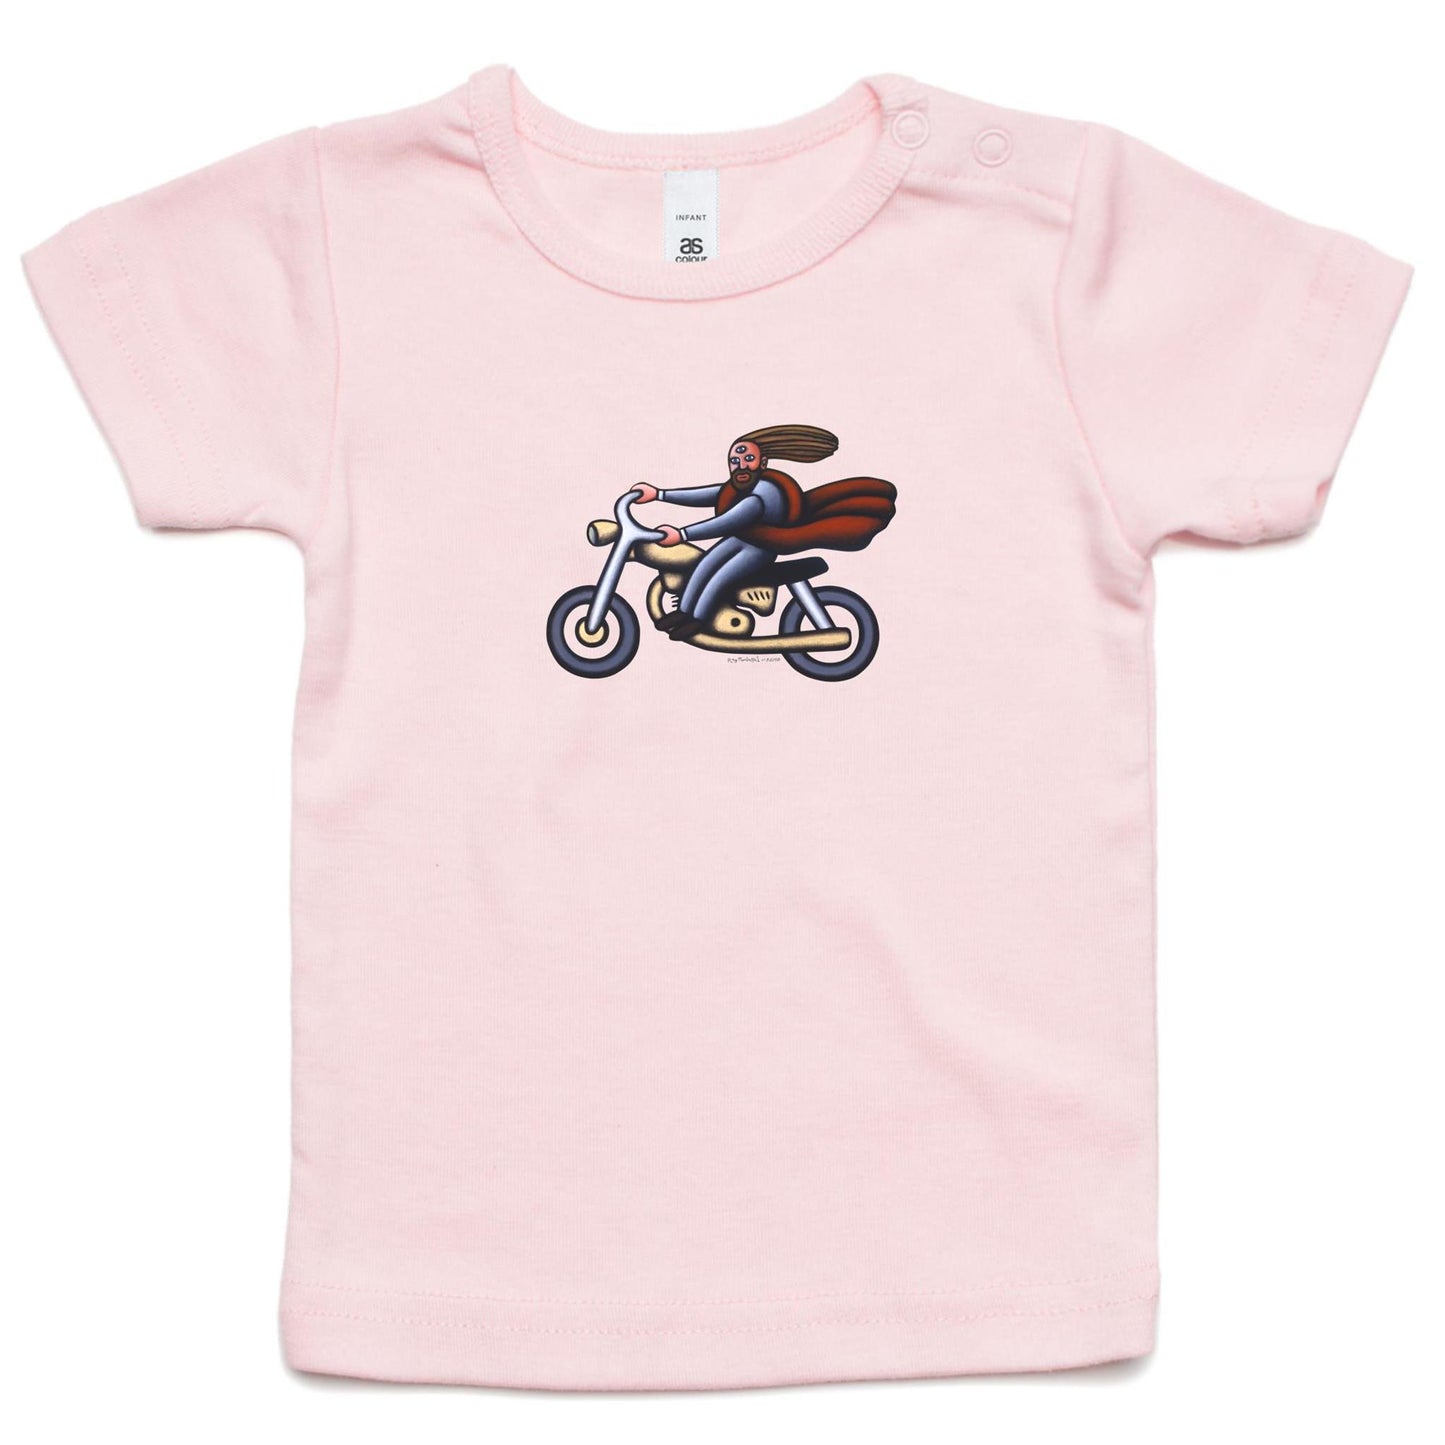 Australian Jesus on the Golden Motorbike T Shirts for Babies